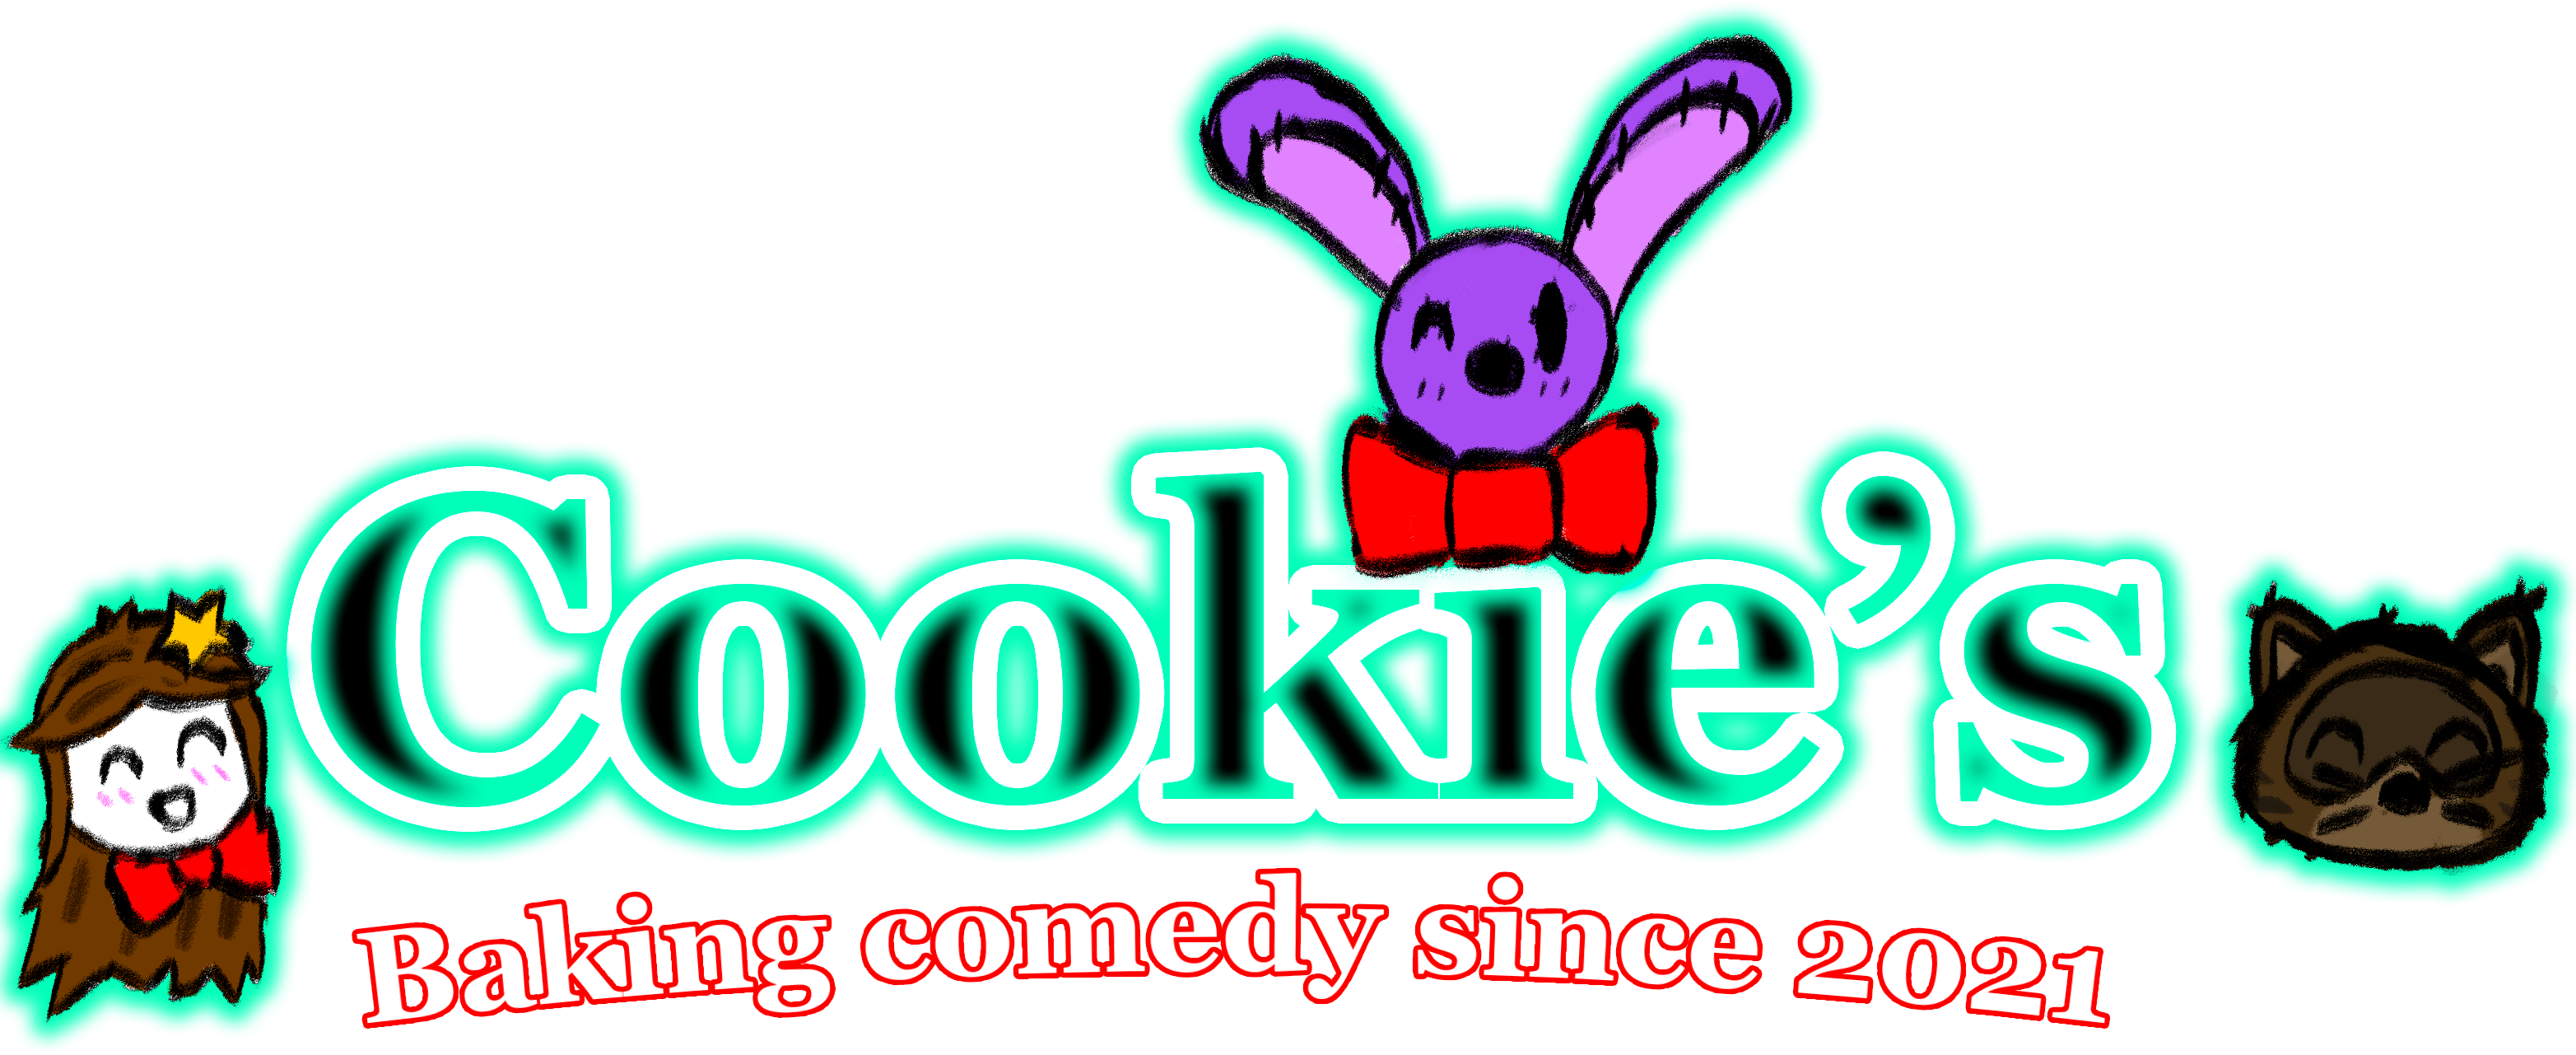 Cookie's Logo